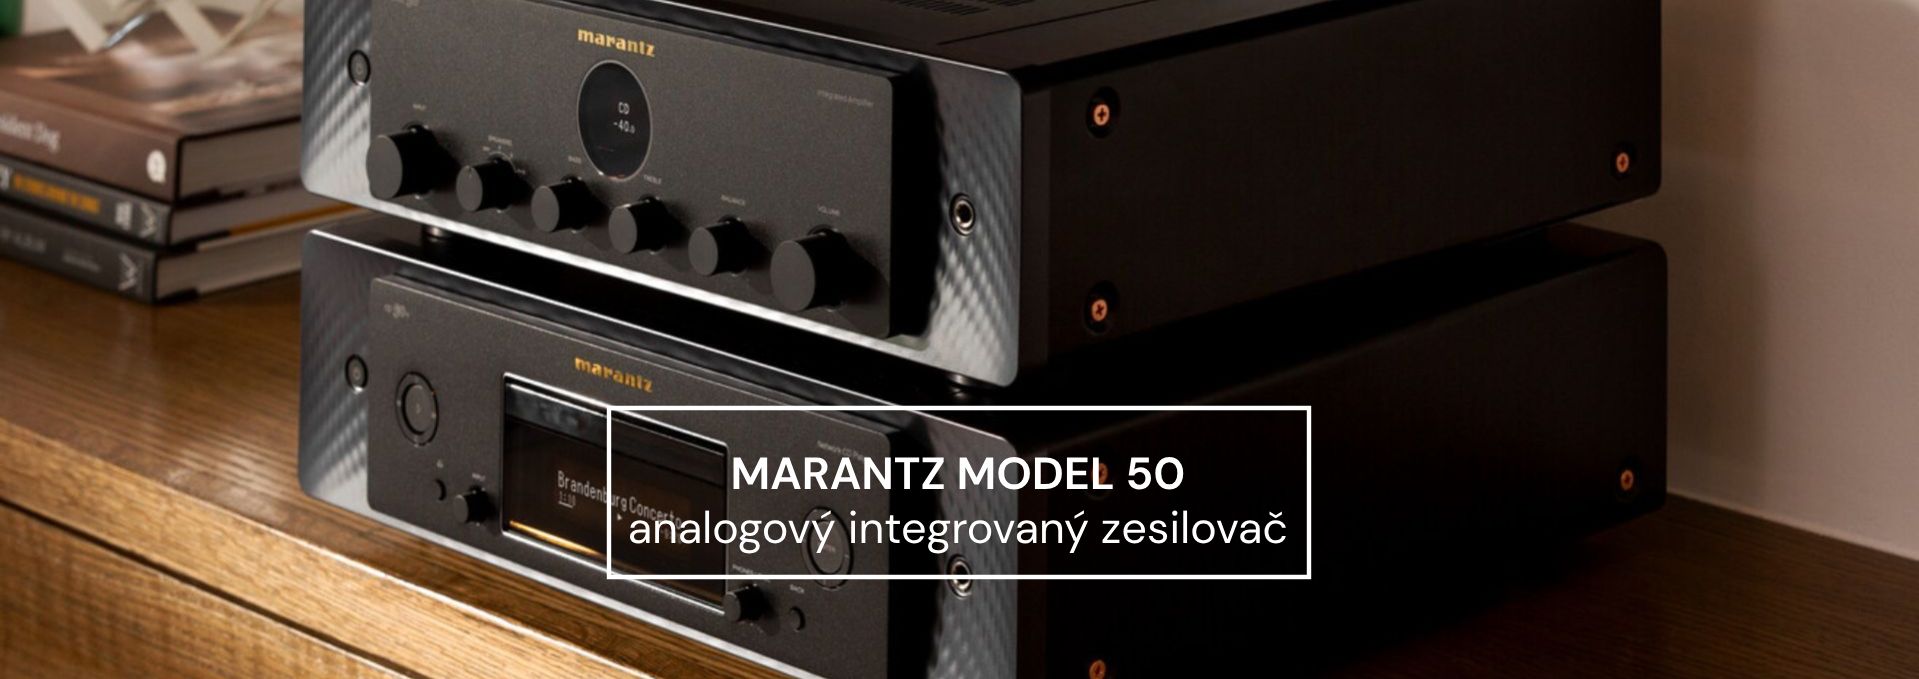 Marantz MODEL 50